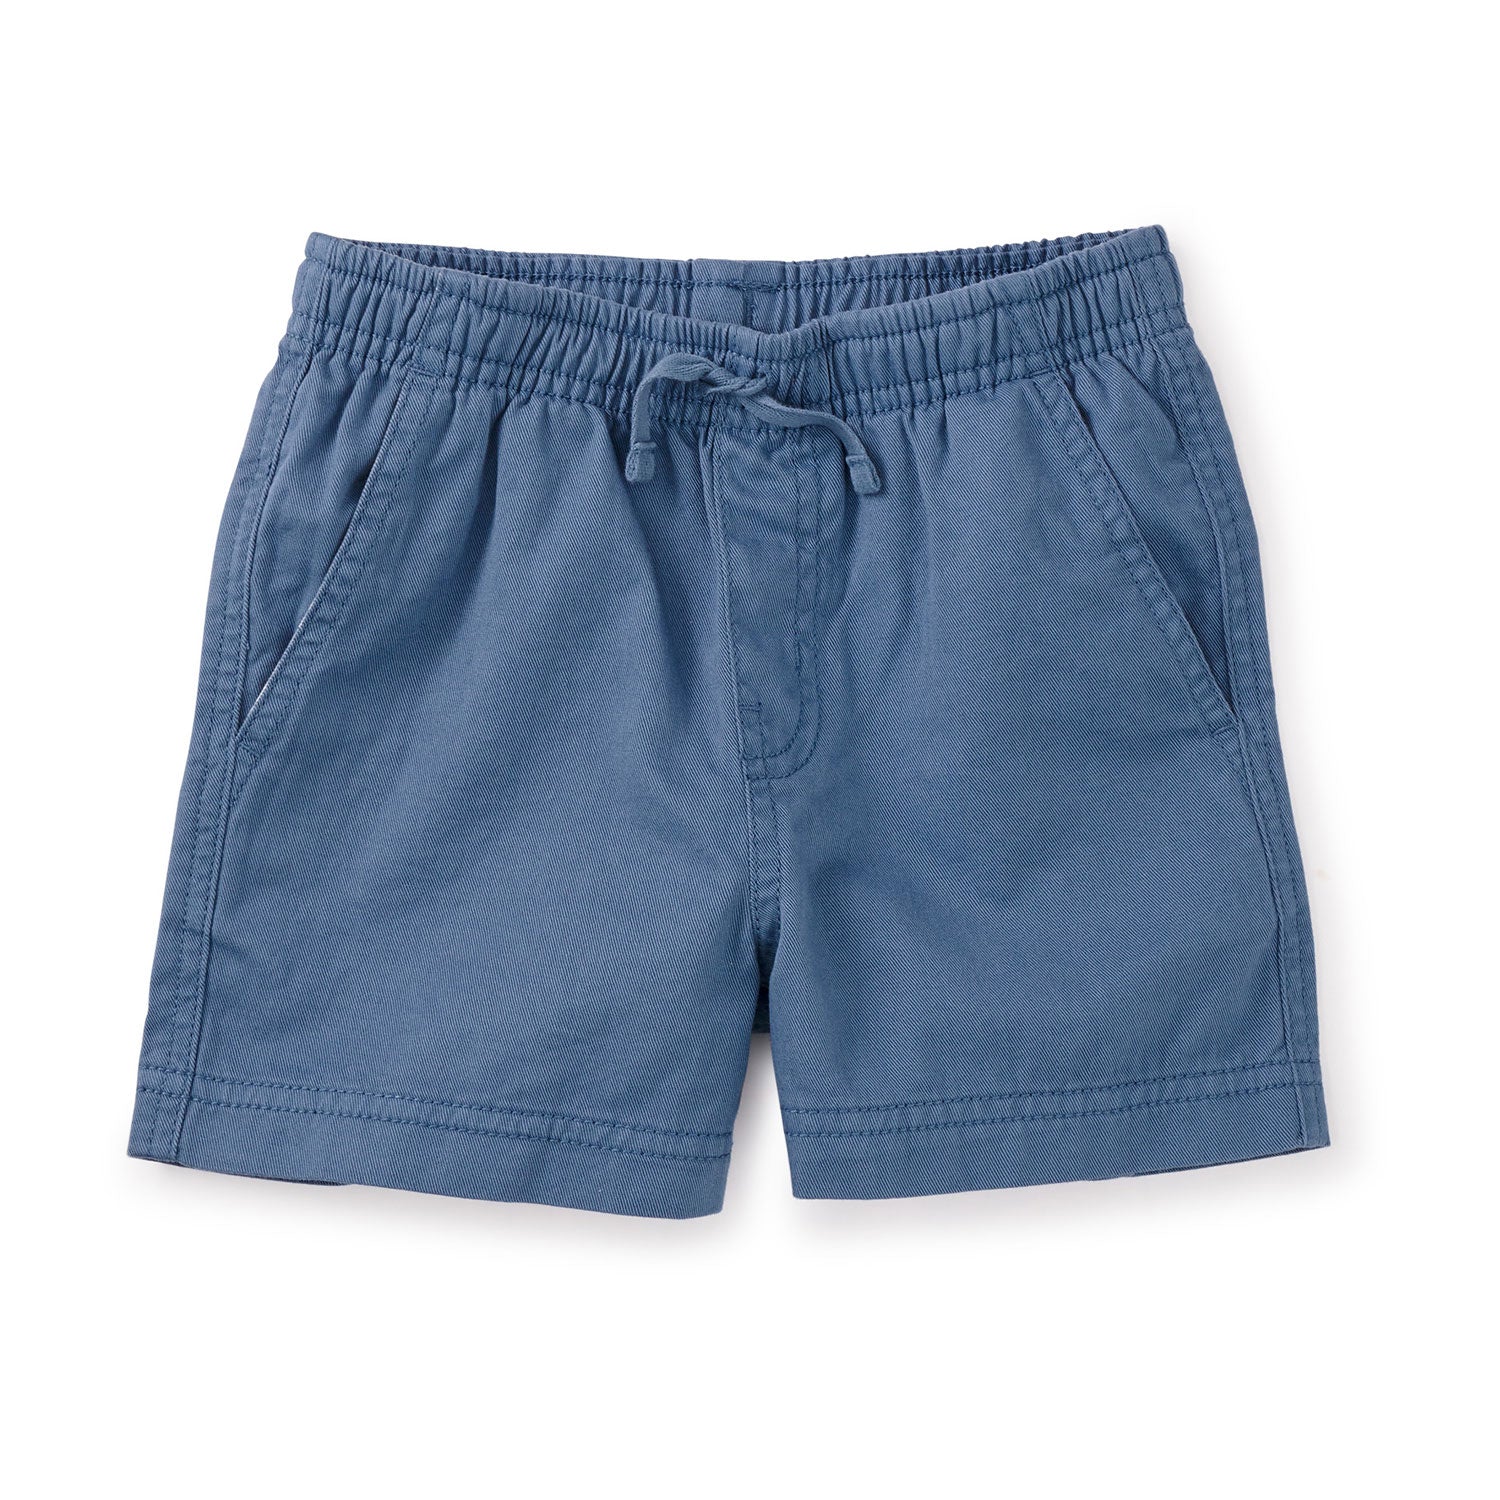 Tea Collection Twill Sport Shorts - Coronet Blue